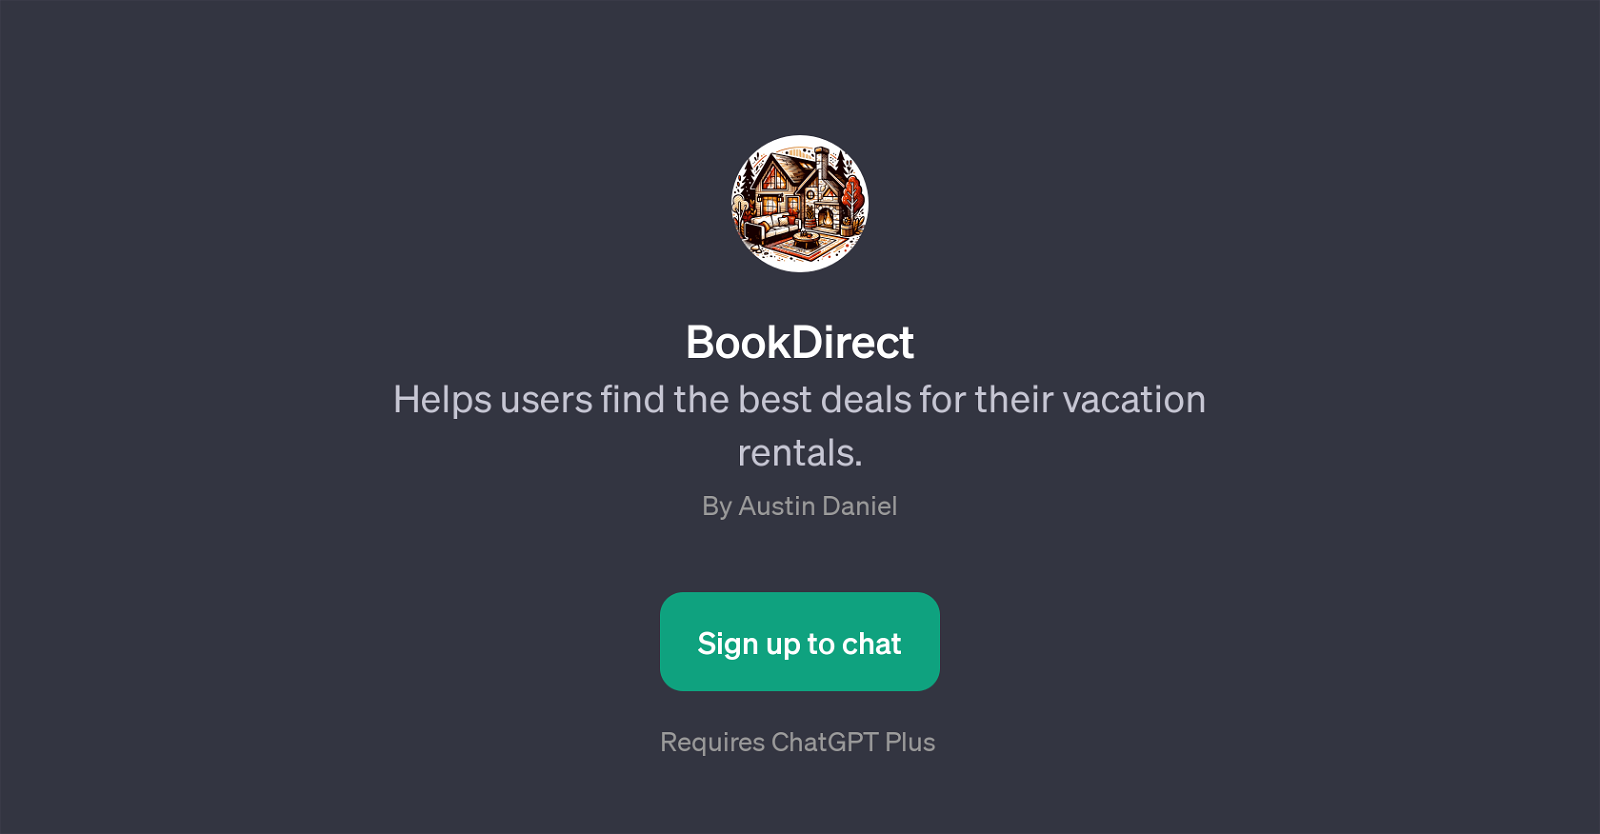 BookDirect website